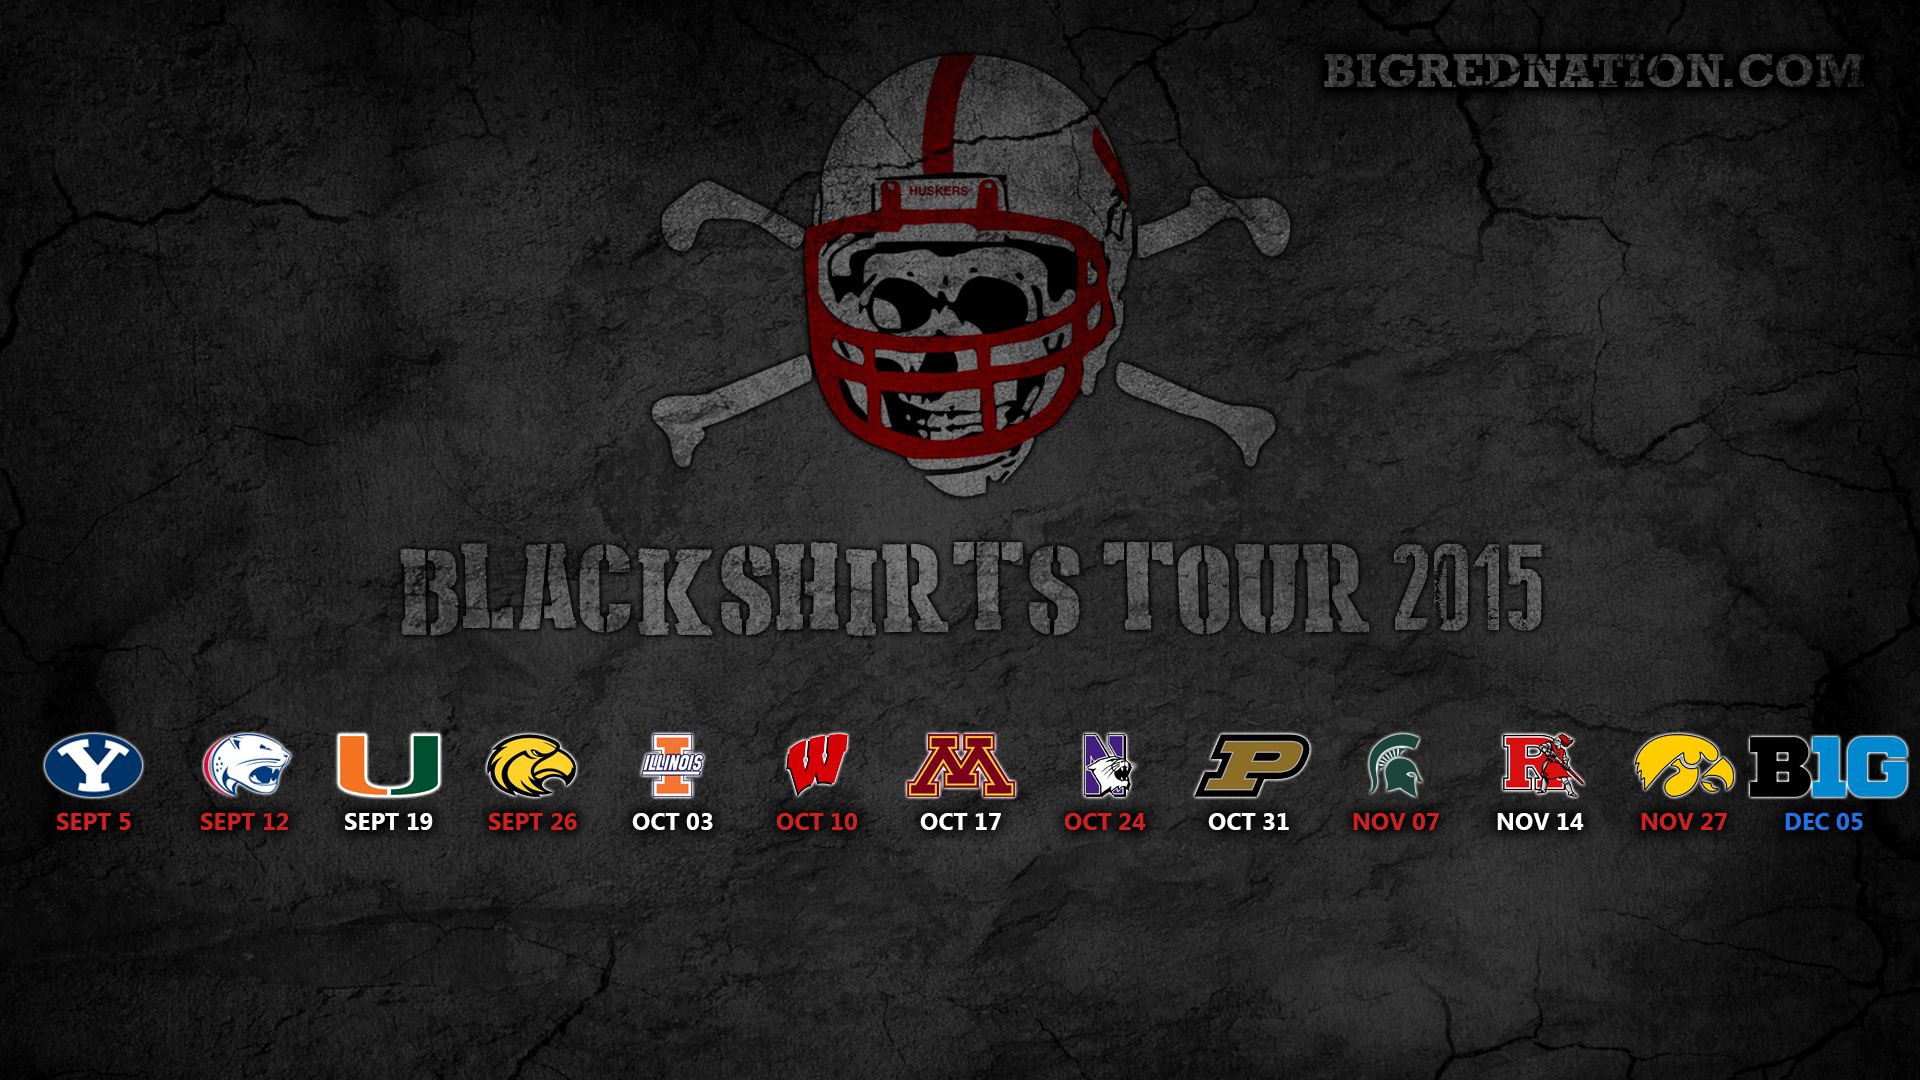 2015 Nebraska Blackshirts Tour Schedule | Big Red Nation